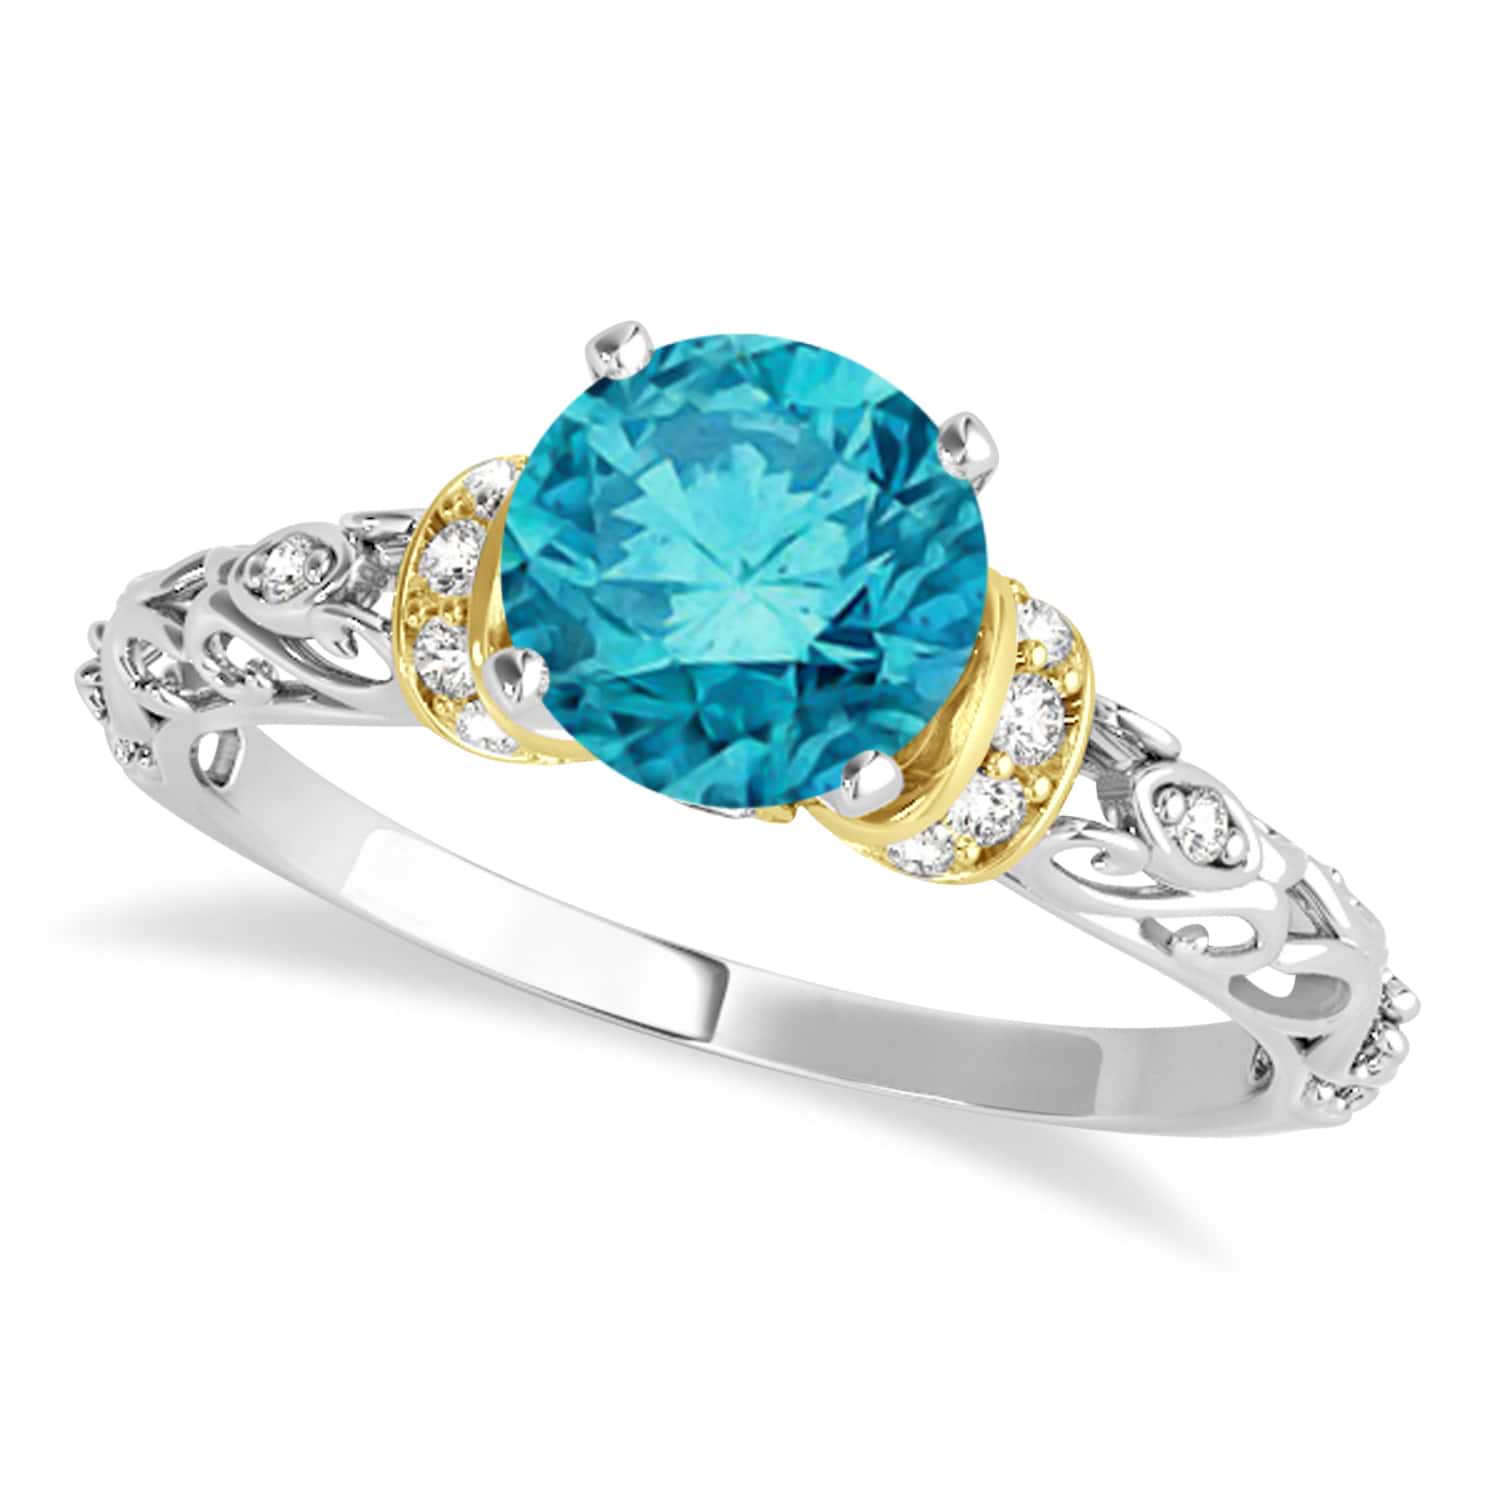 Blue Diamond & Diamond Antique Style Engagement Ring 14k Two-Tone Gold (1.12ct)